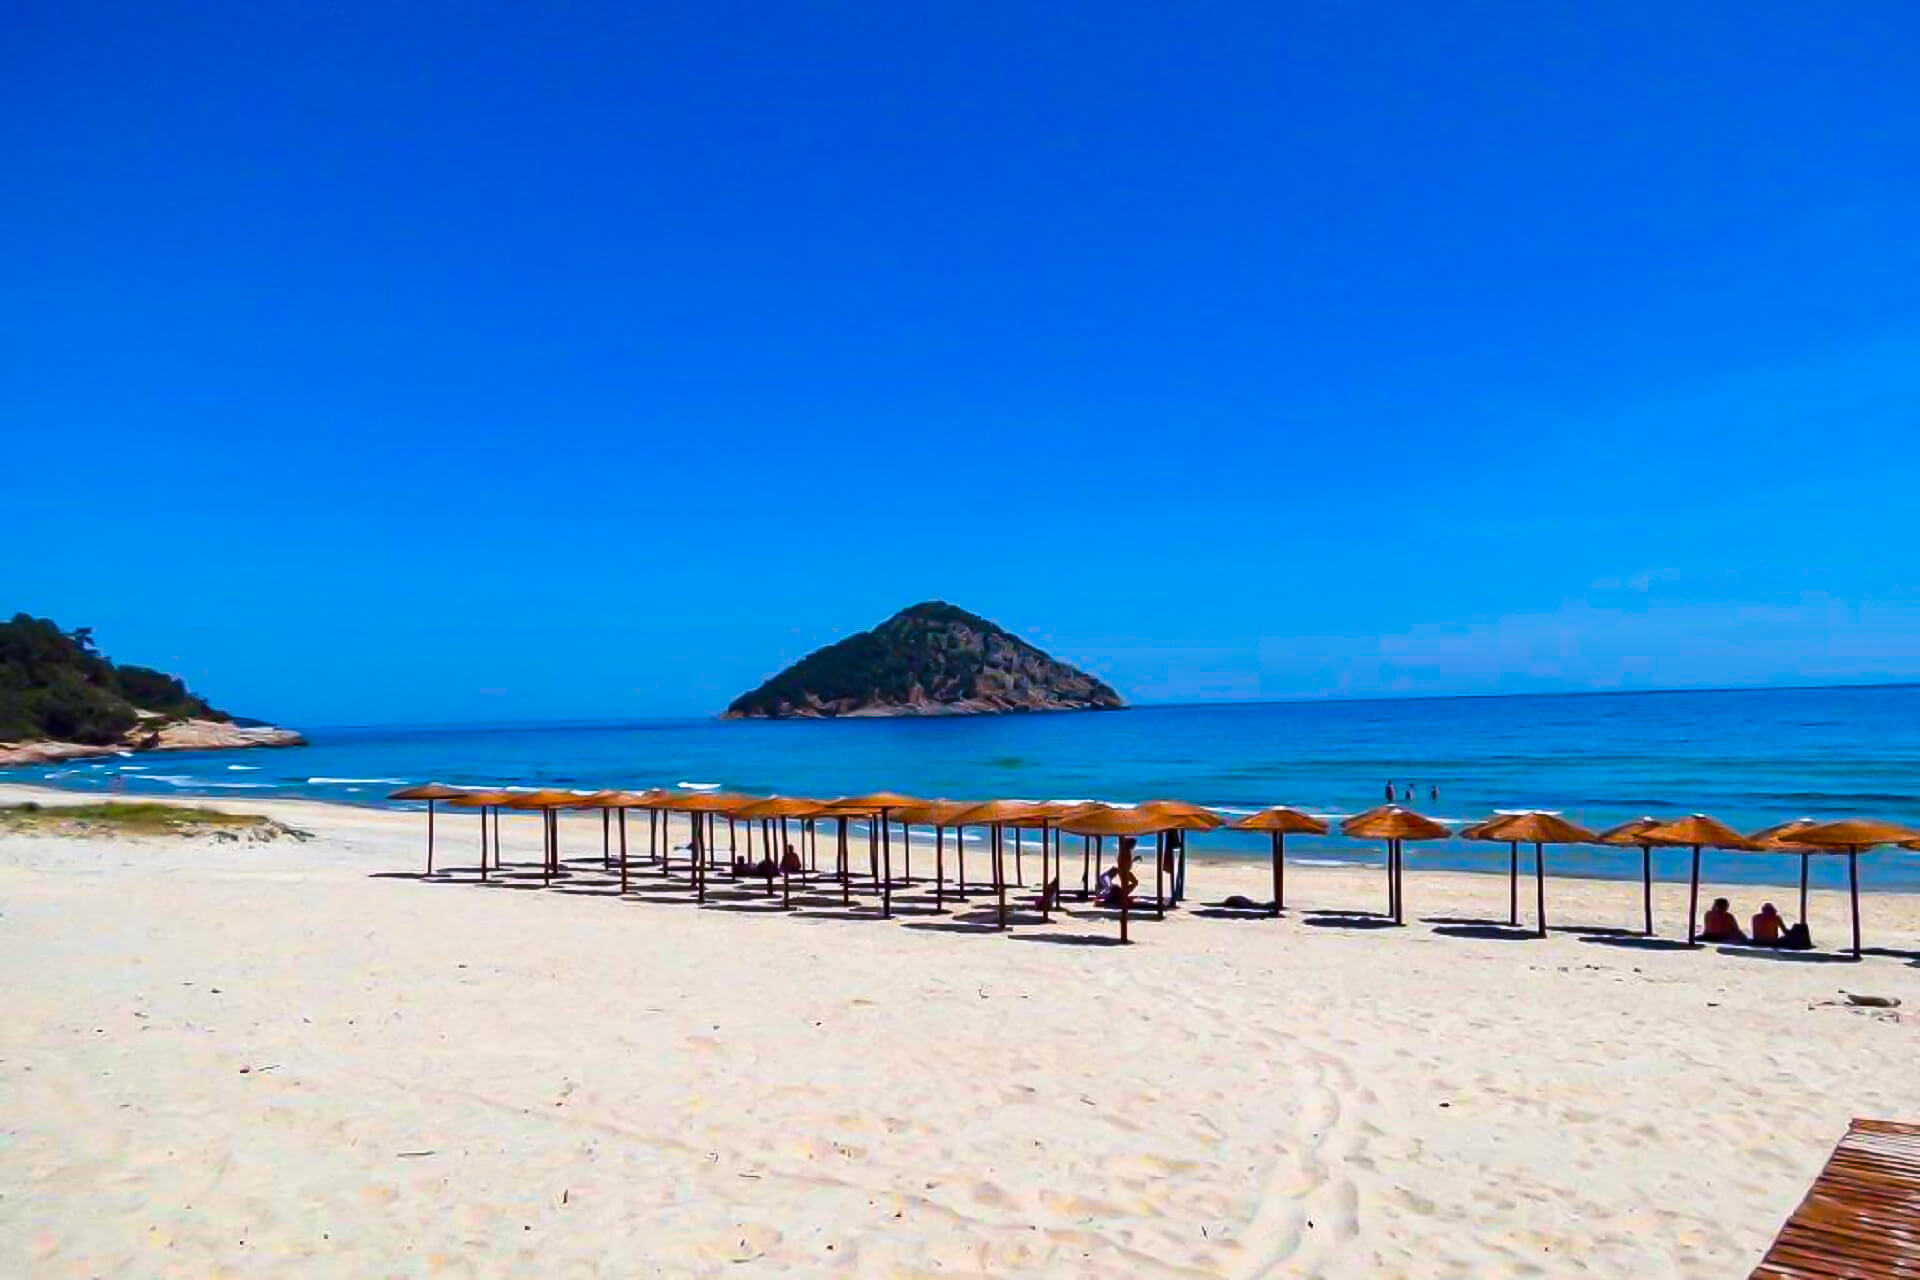 Thassos Paradise Beach - A Hidden Paradise for FKK Enthusiasts